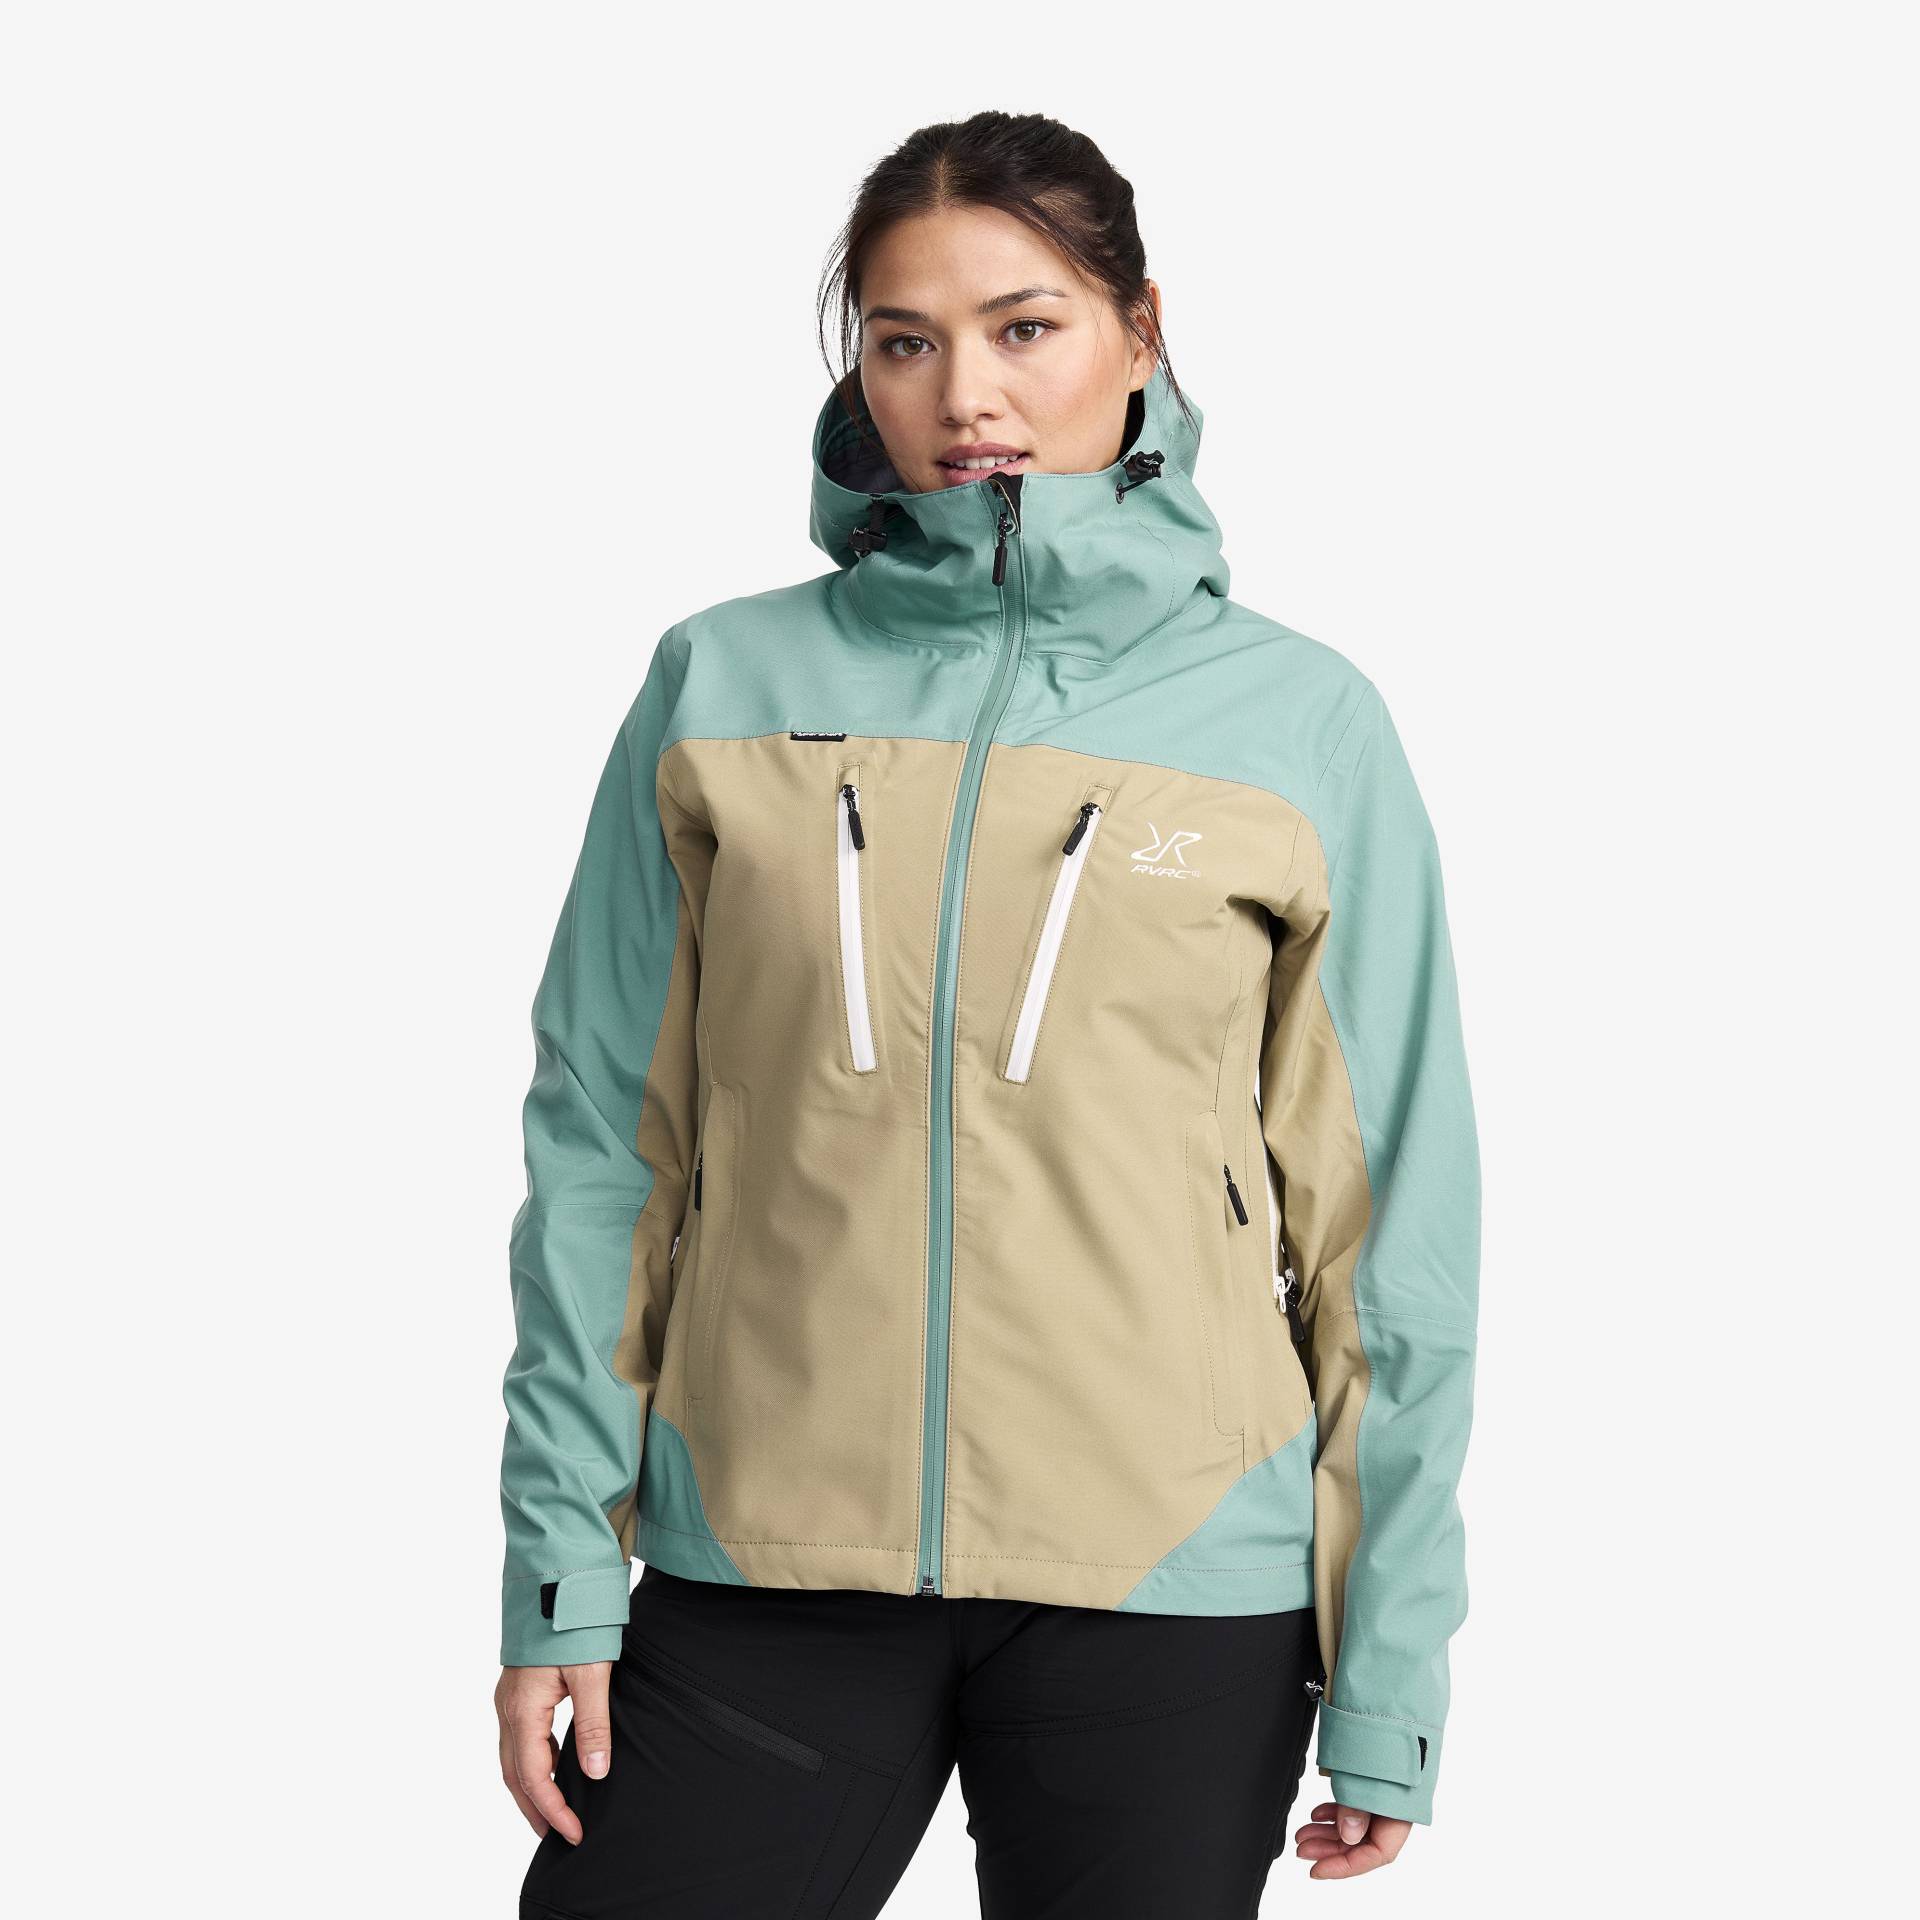 Silence Proshell 3L Jacket Damen Arctic/Khaki, Größe:2XL - Outdoorjacke, Regenjacke & Softshelljacke von RevolutionRace